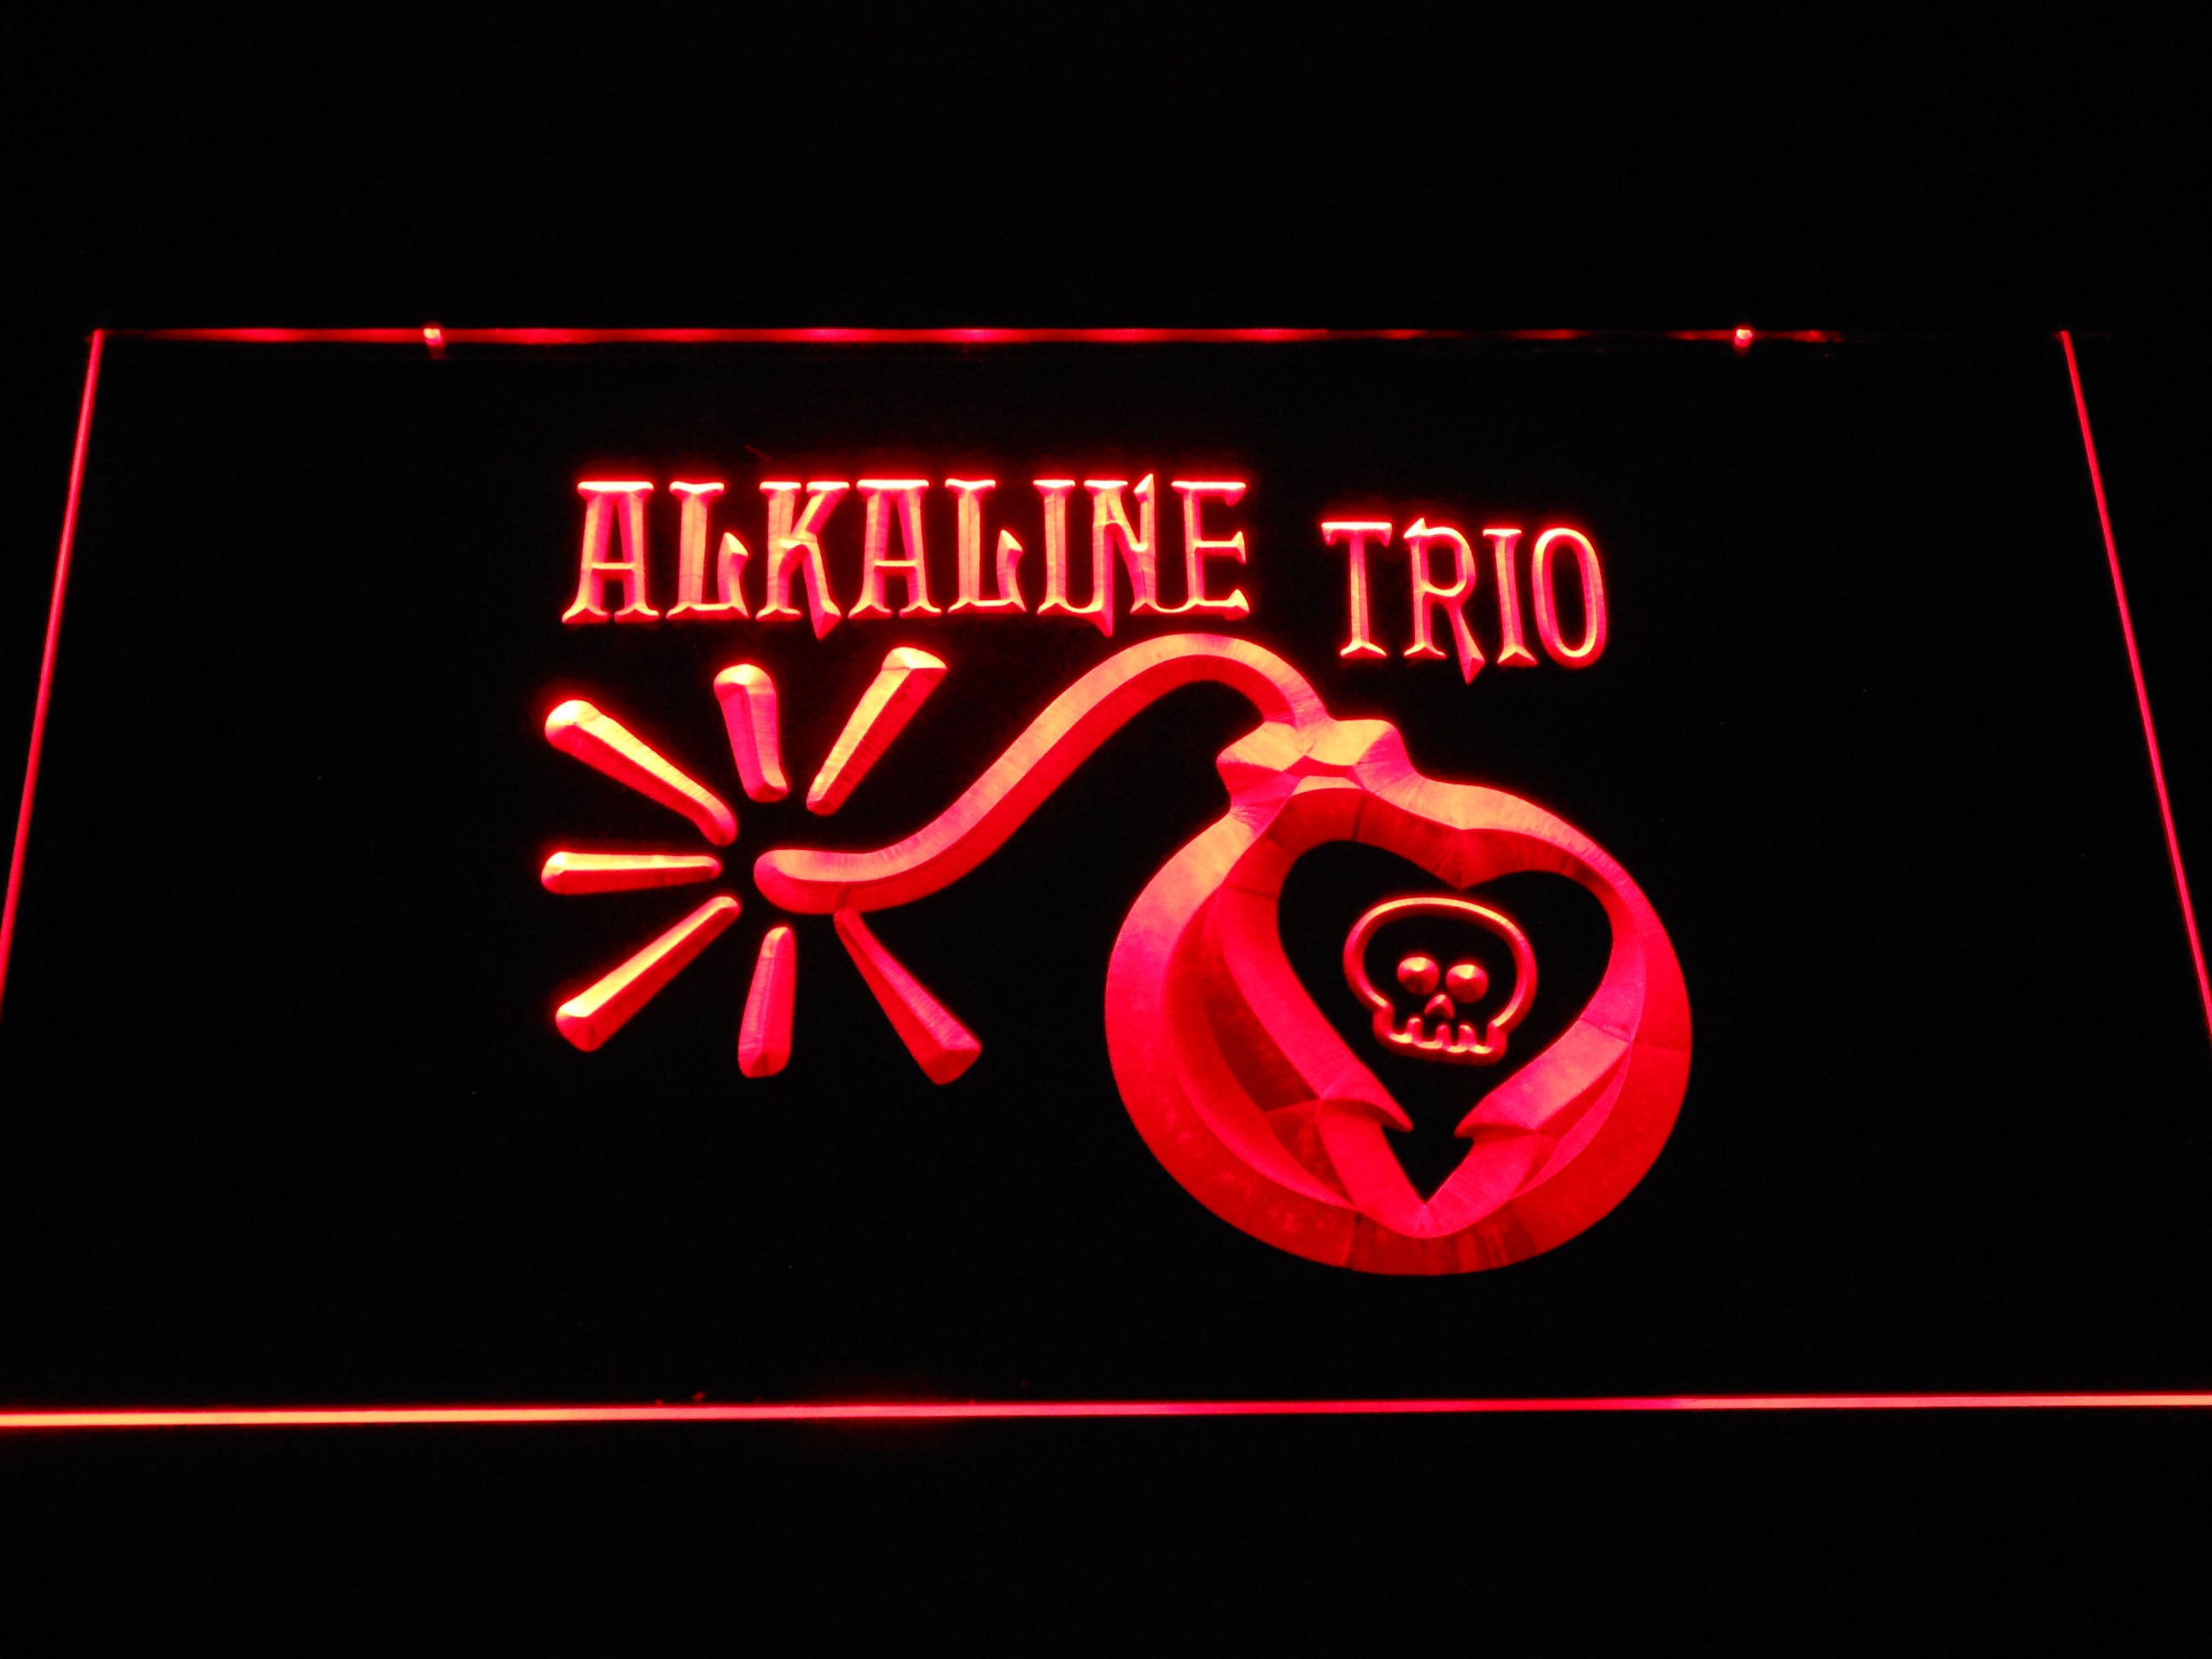 Alkaline Trio Punk Rock Band LED Neon Sign